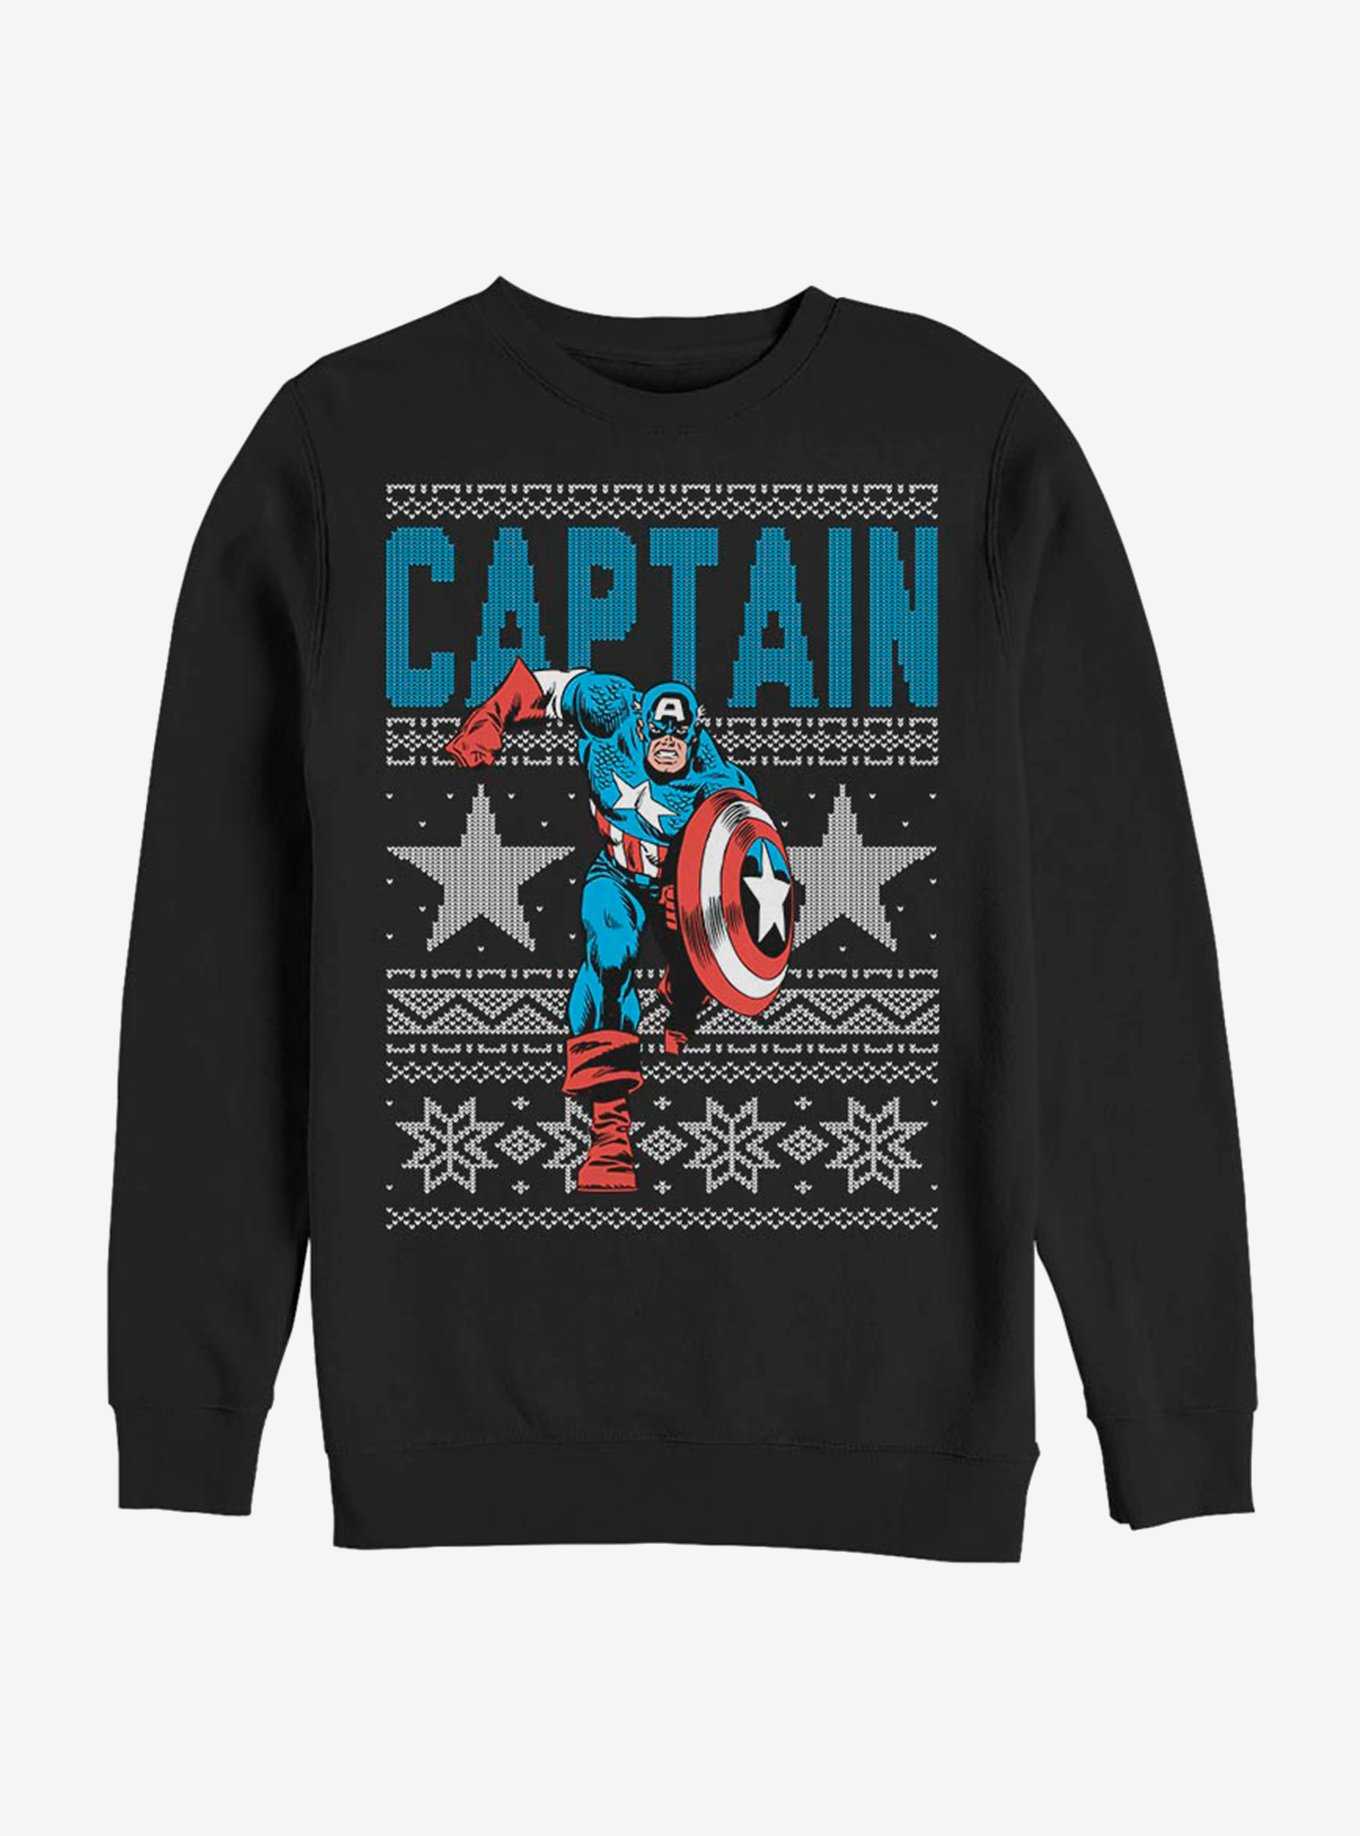 Marvel Captain America Ugly Captain Sweatshirt, , hi-res